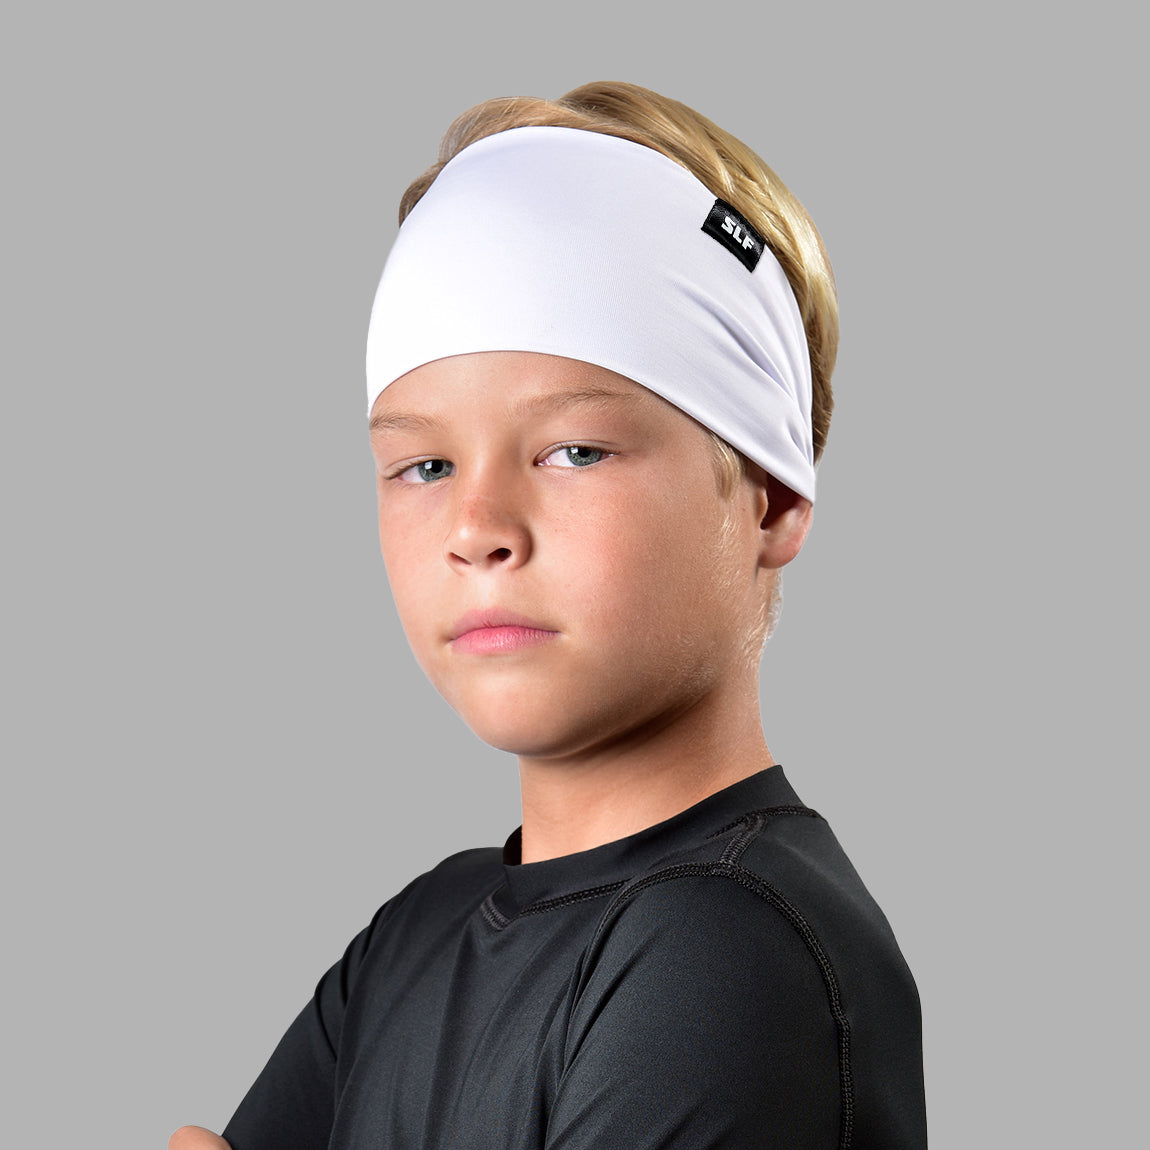 Basic White Kids Headband